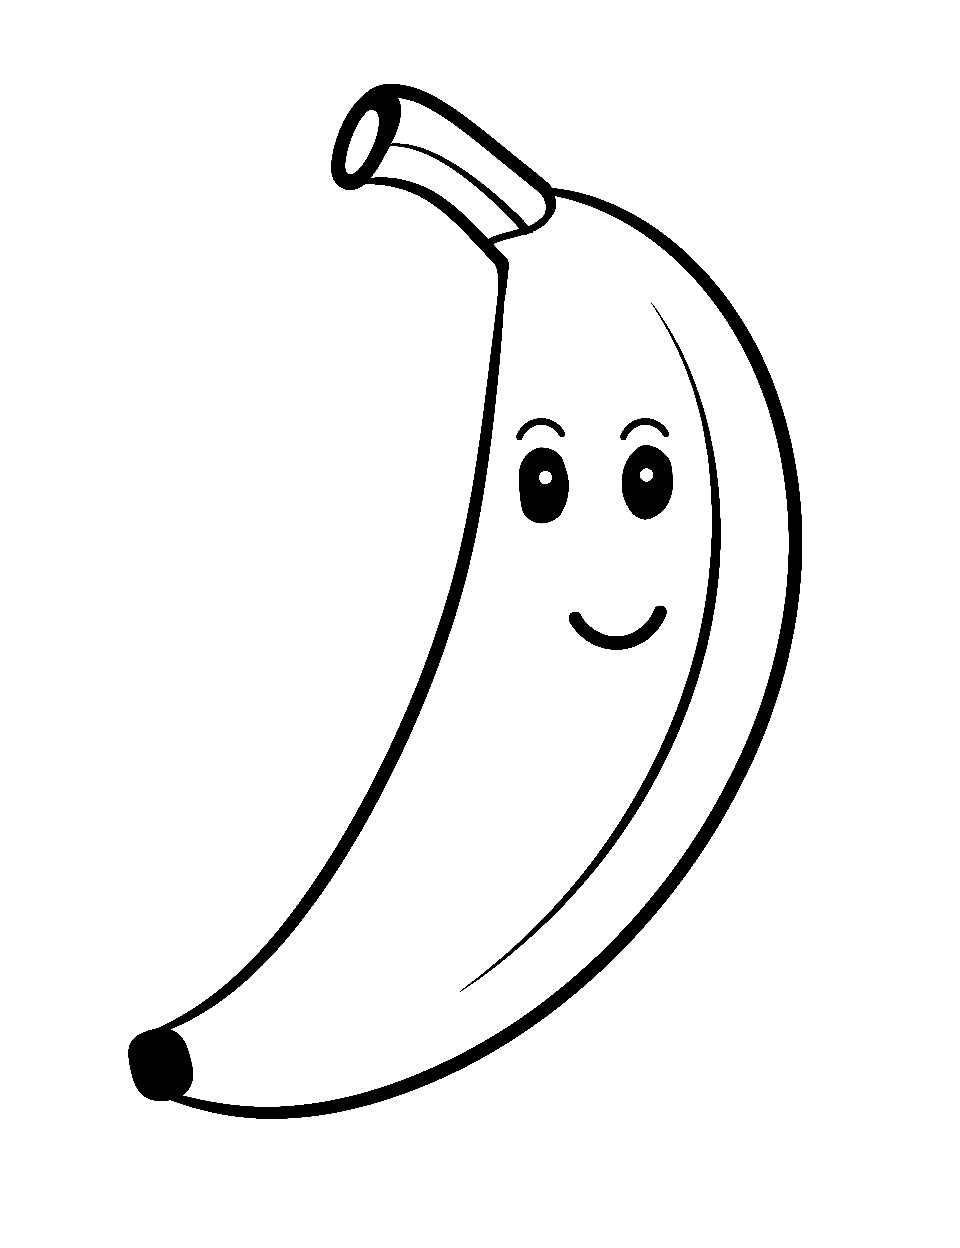 A Simple Banana Food Coloring Page - Happy Face Emoji expression on a banana.